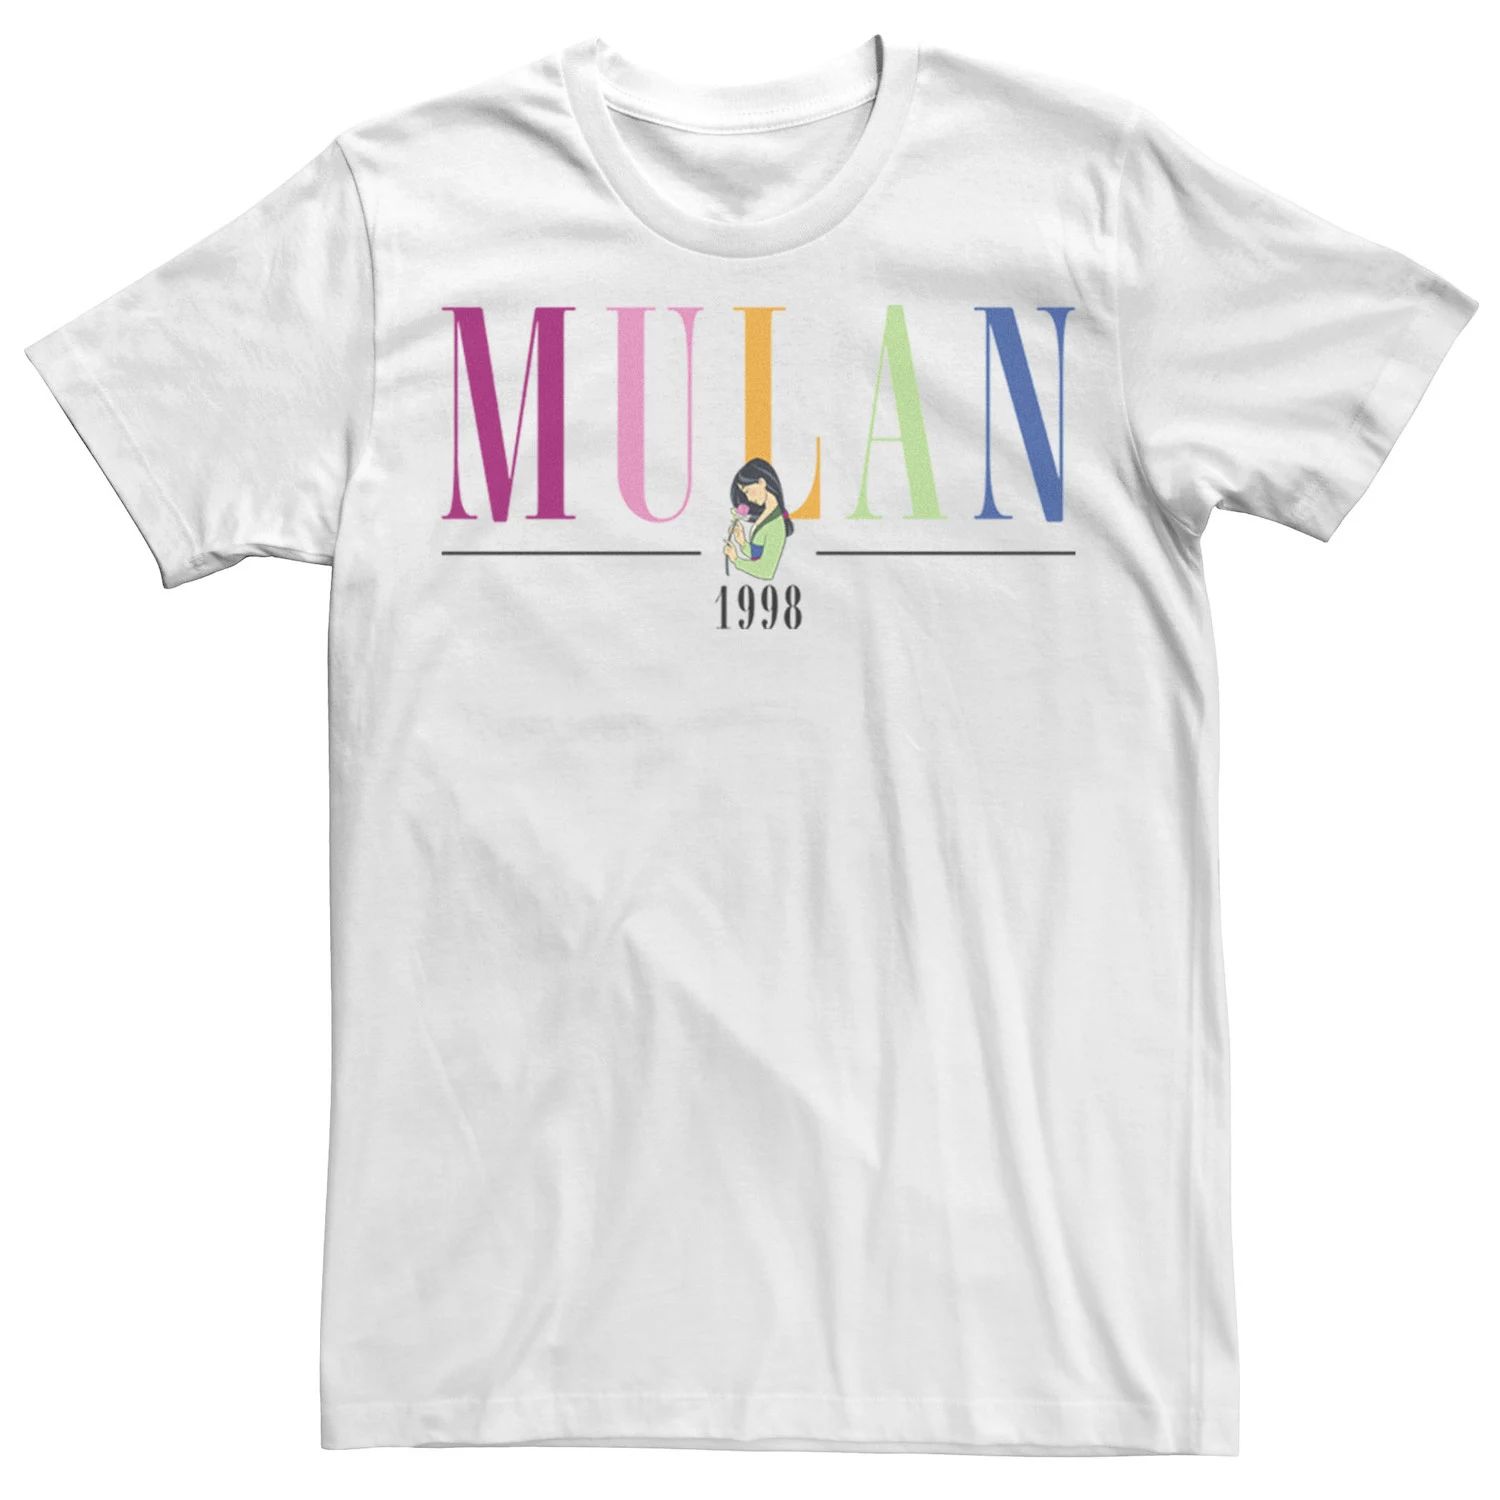 Мужская футболка Disney Mulan & Mushu 1998 с надписью в стиле поп-музыки Licensed Character